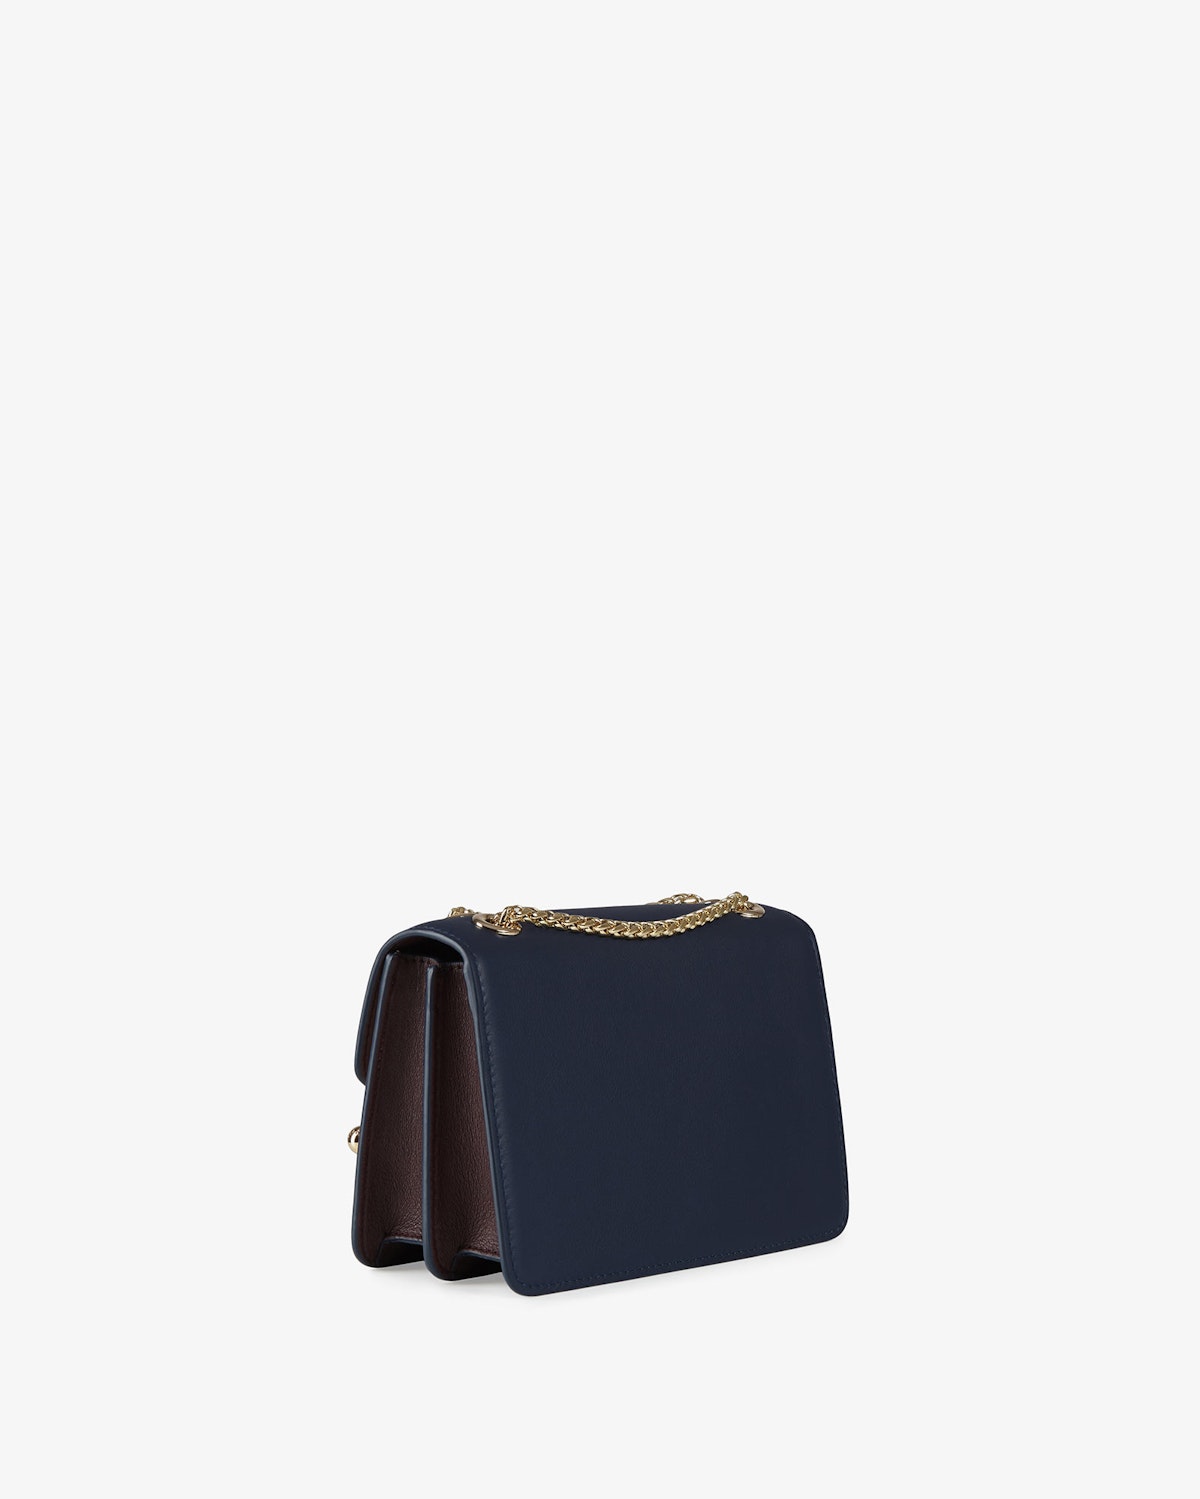 Strathberry - East/West Mini - Crossbody Leather Mini Handbag ...